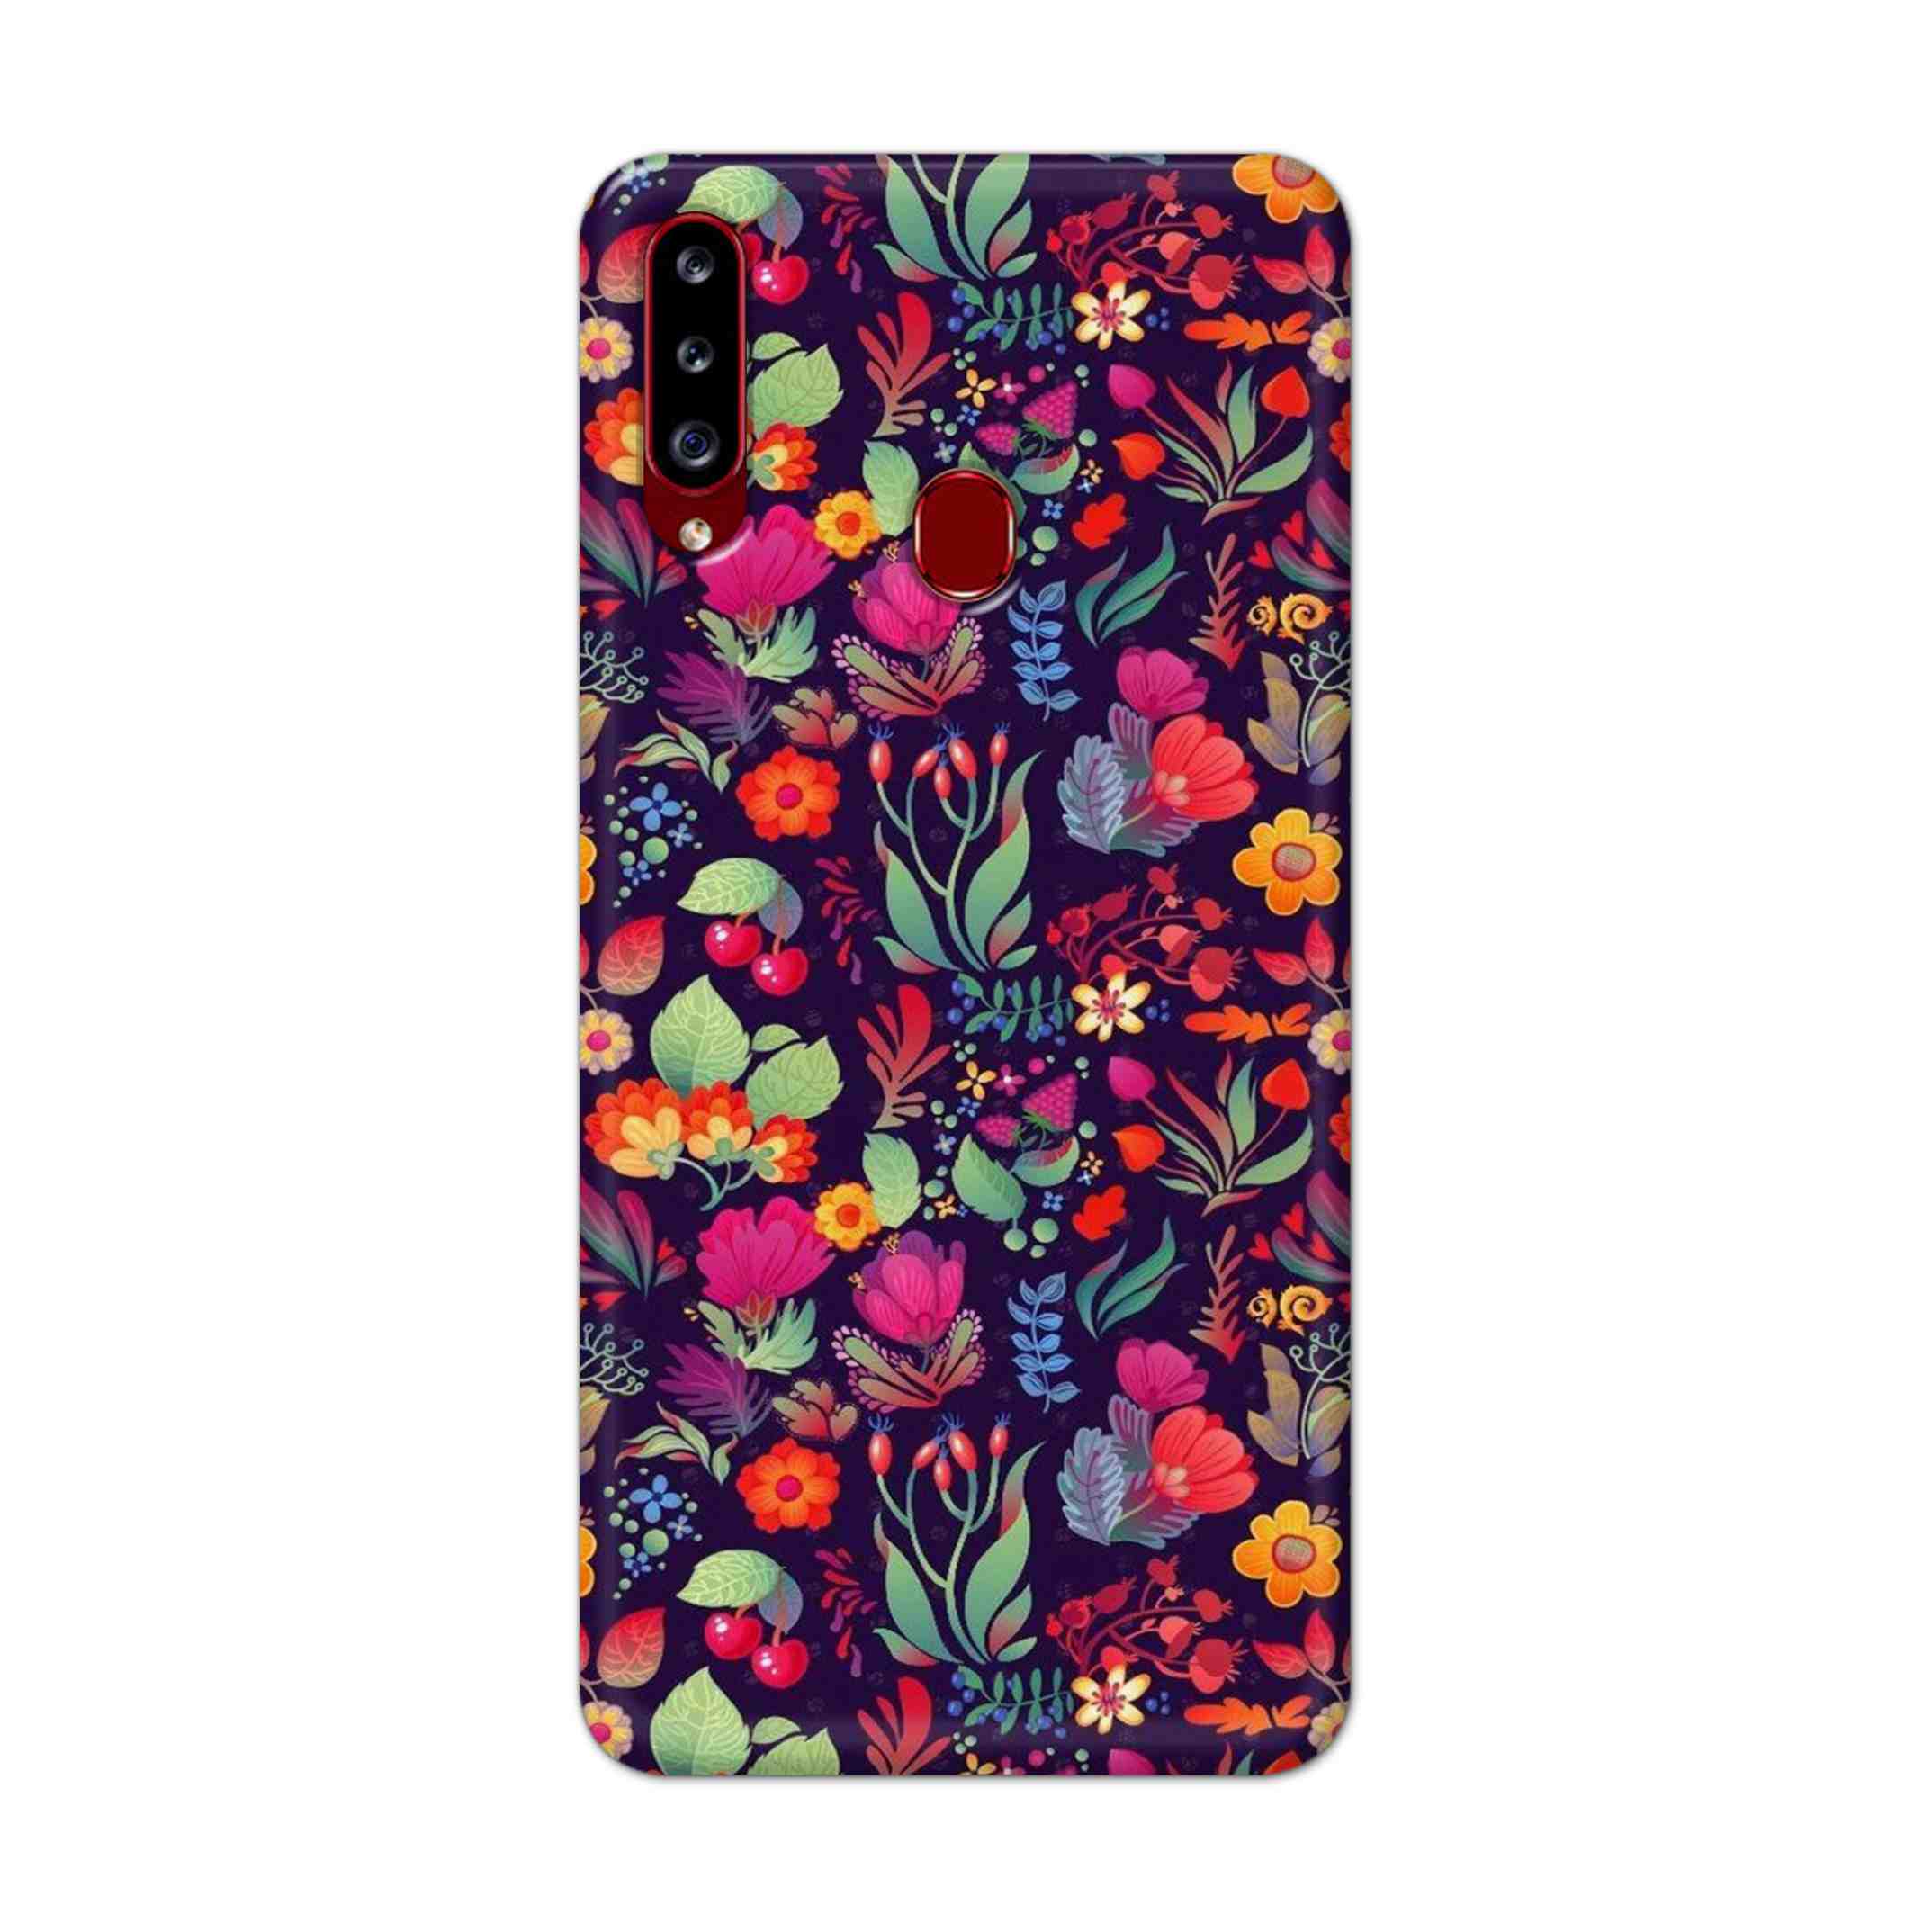 Buy Fruits Flower Hard Back Mobile Phone Case Cover For Samsung A20s Online